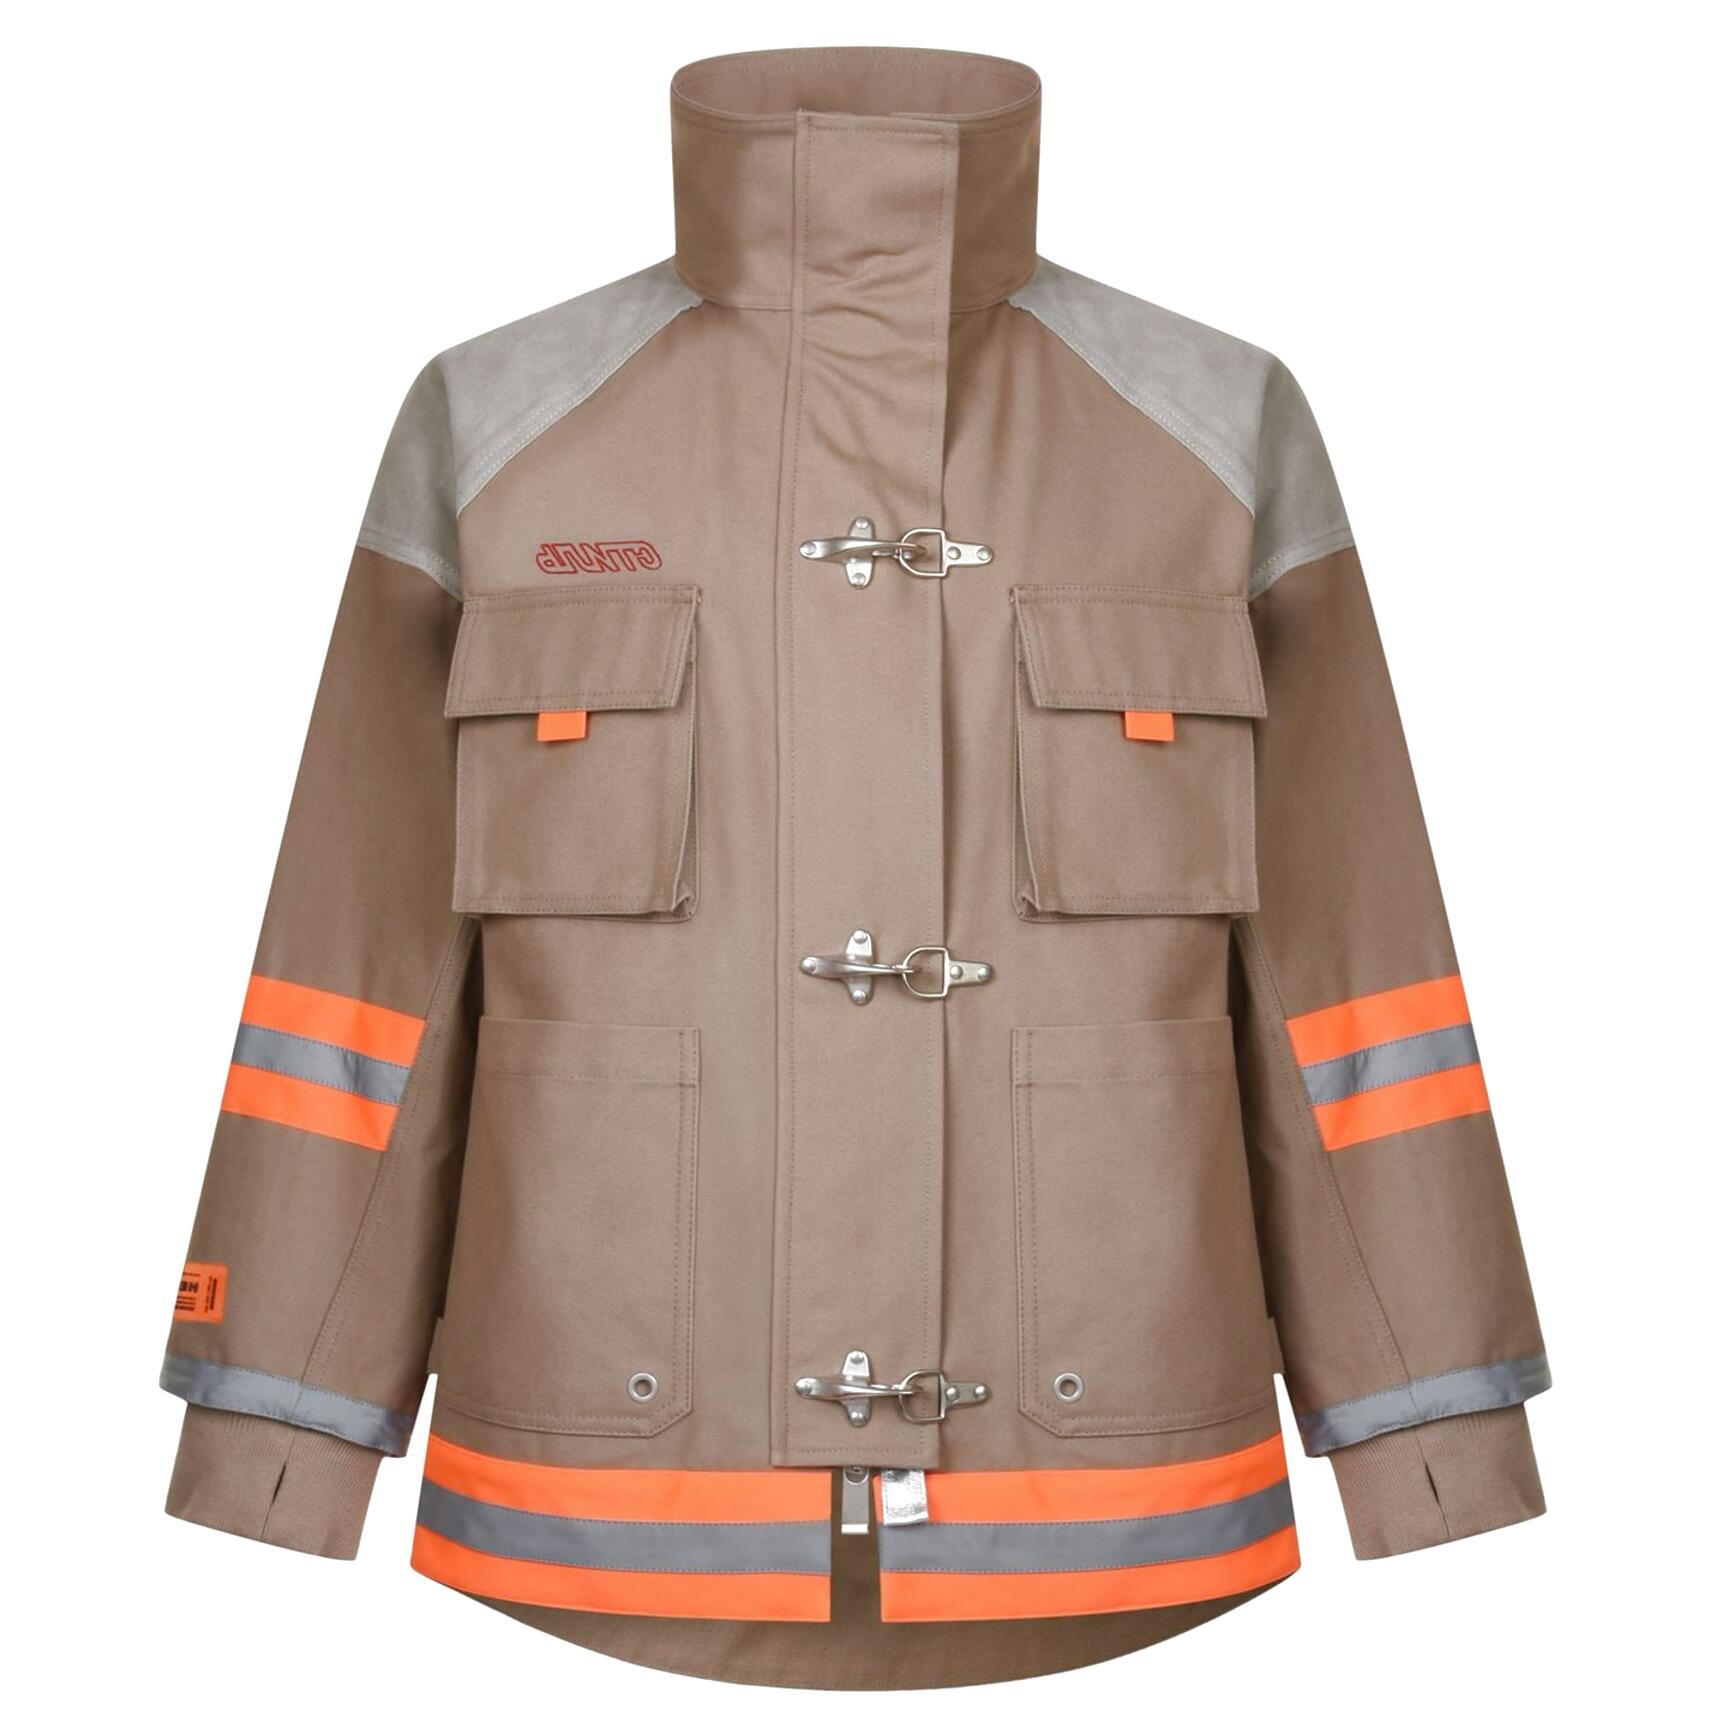 Fireman Jacket for sale in UK | 63 used Fireman Jackets